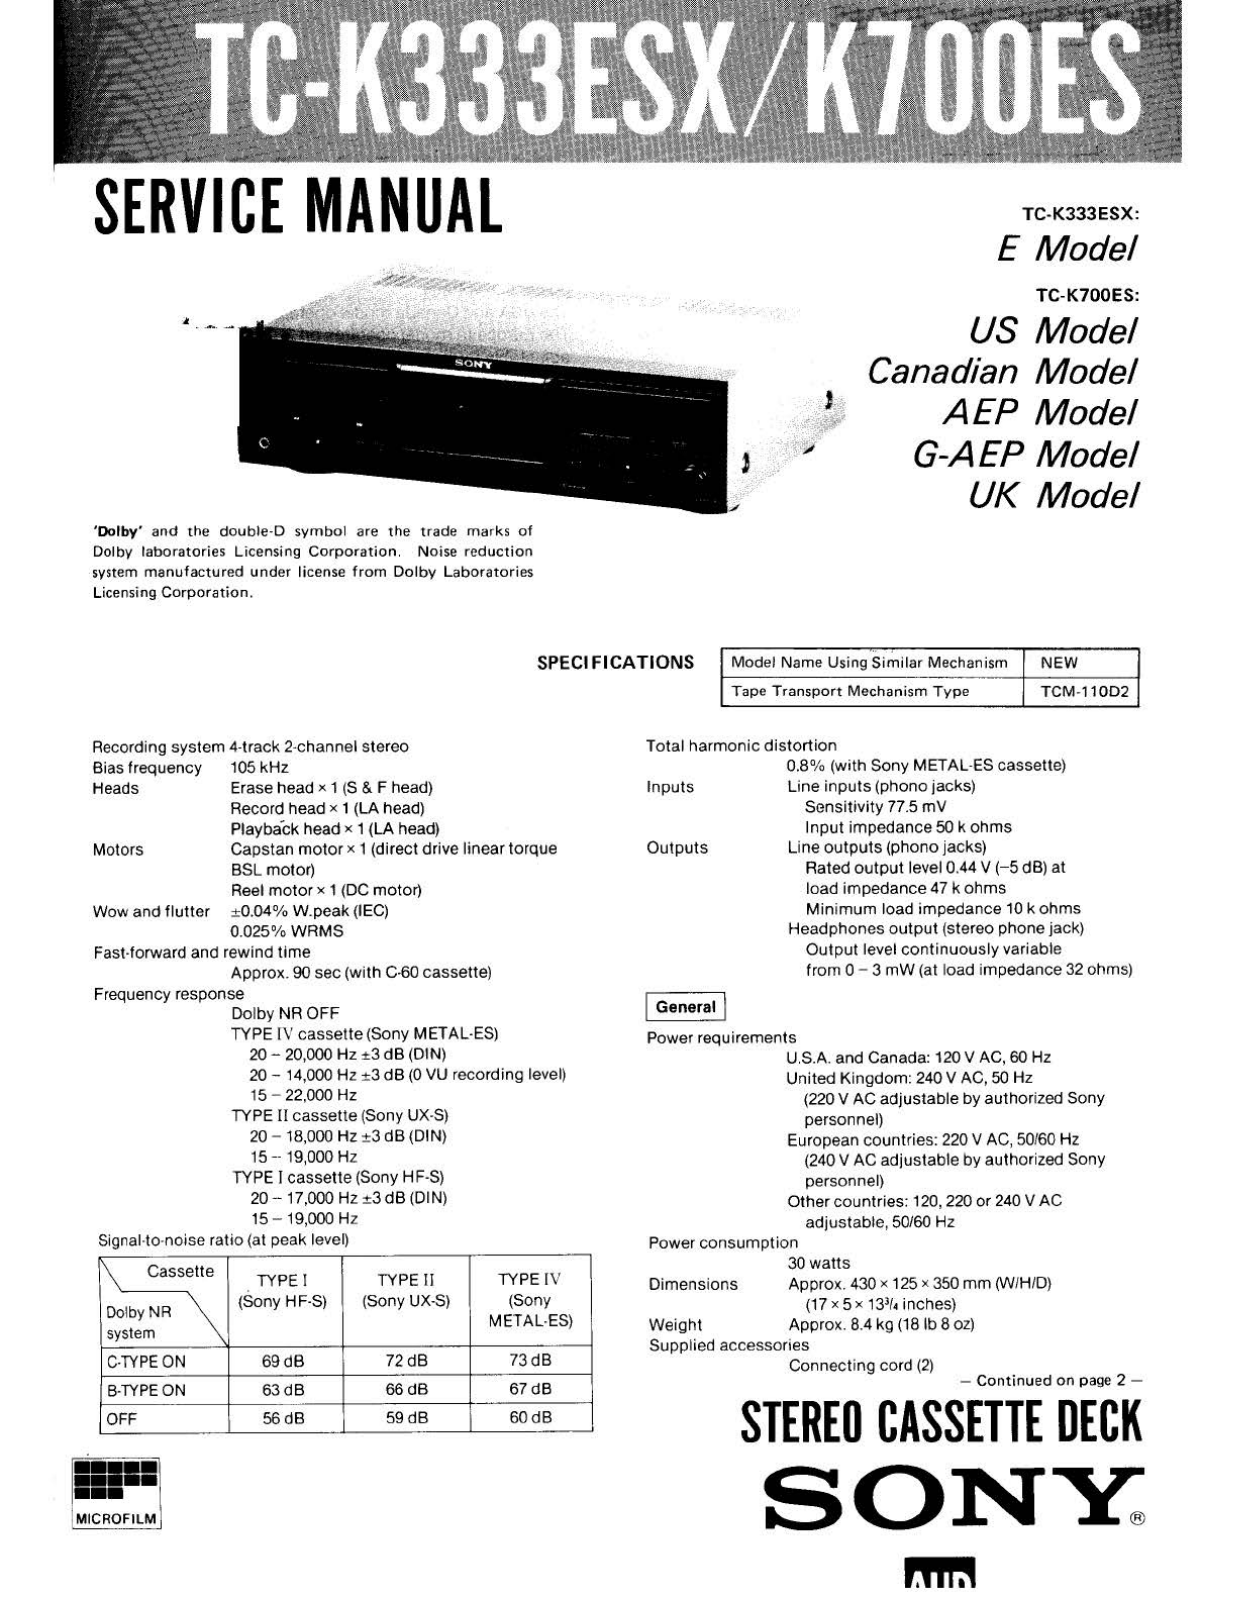 Sony tc-k700es Service Manual